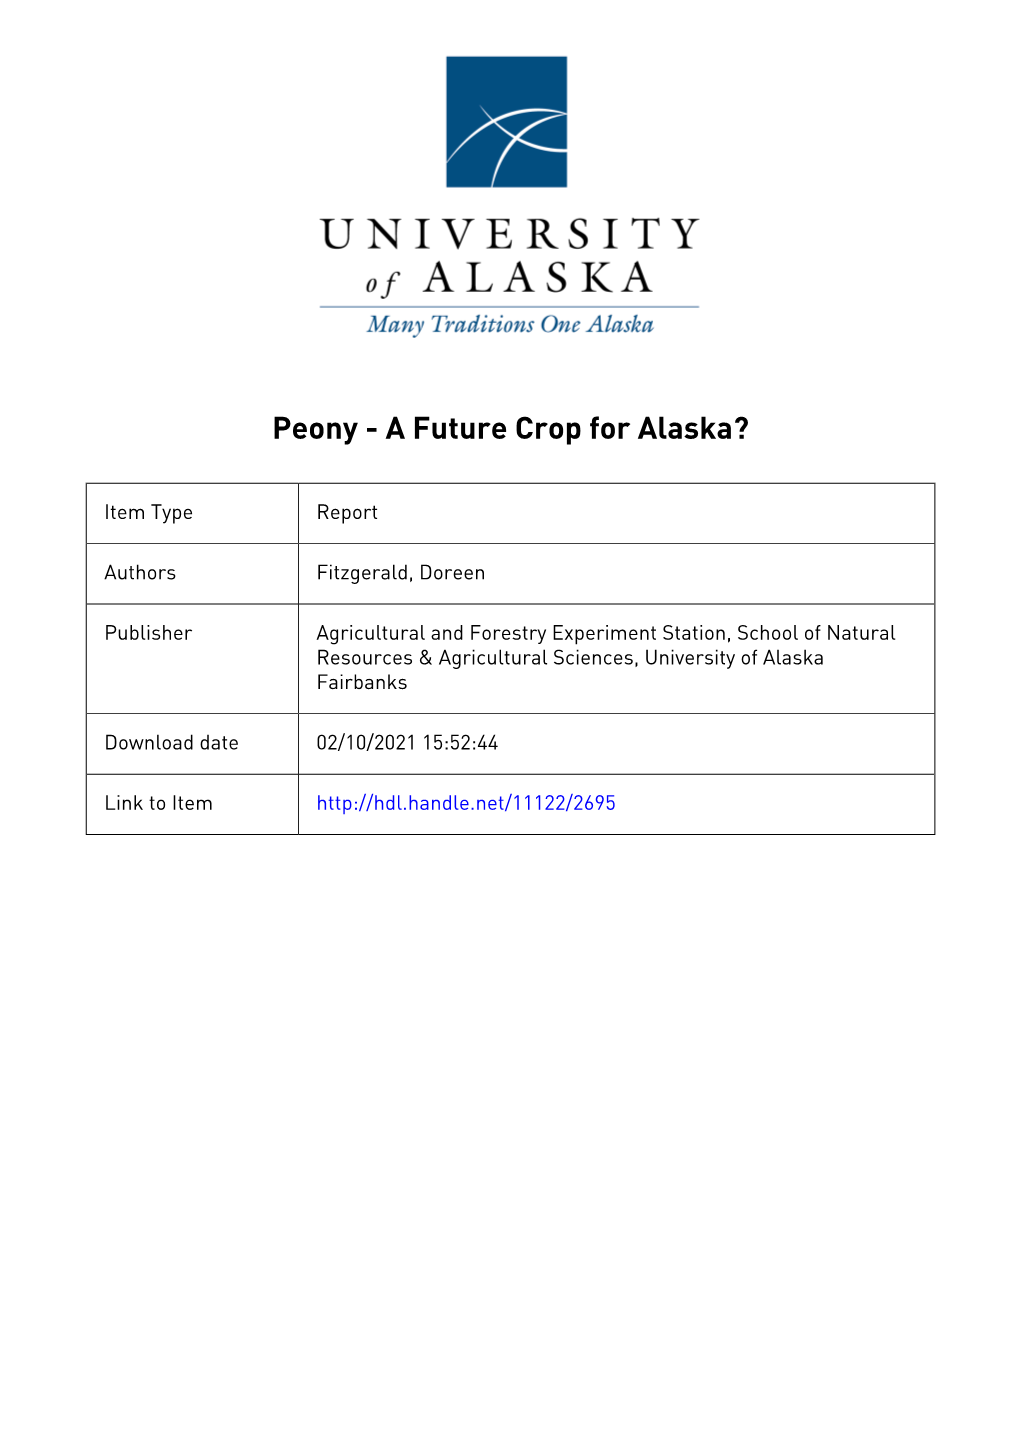 Peony, a Future Crop for Alaska?